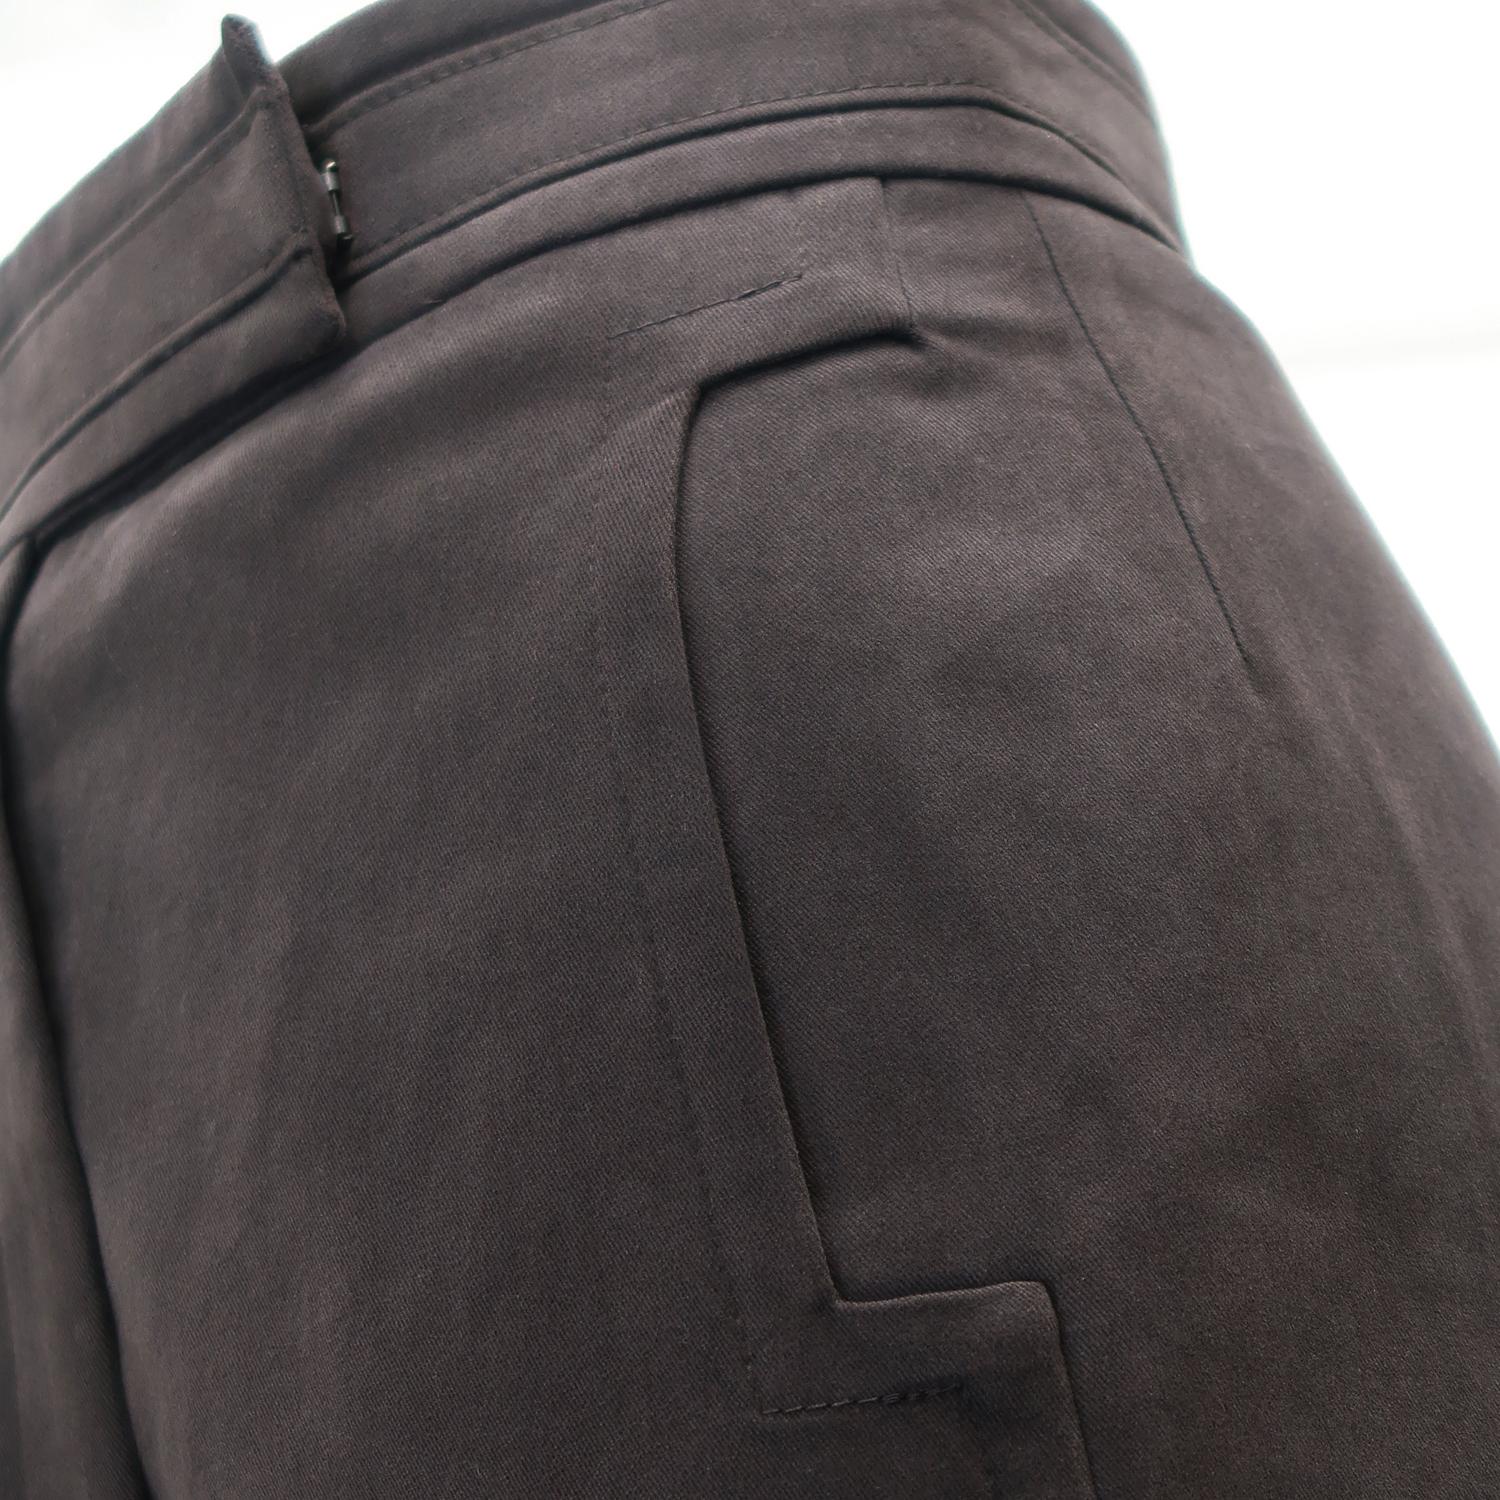 Black Yves Saint Laurent by Tom Ford FW-2003 Higher Waist Skirt with Belt Detailing For Sale